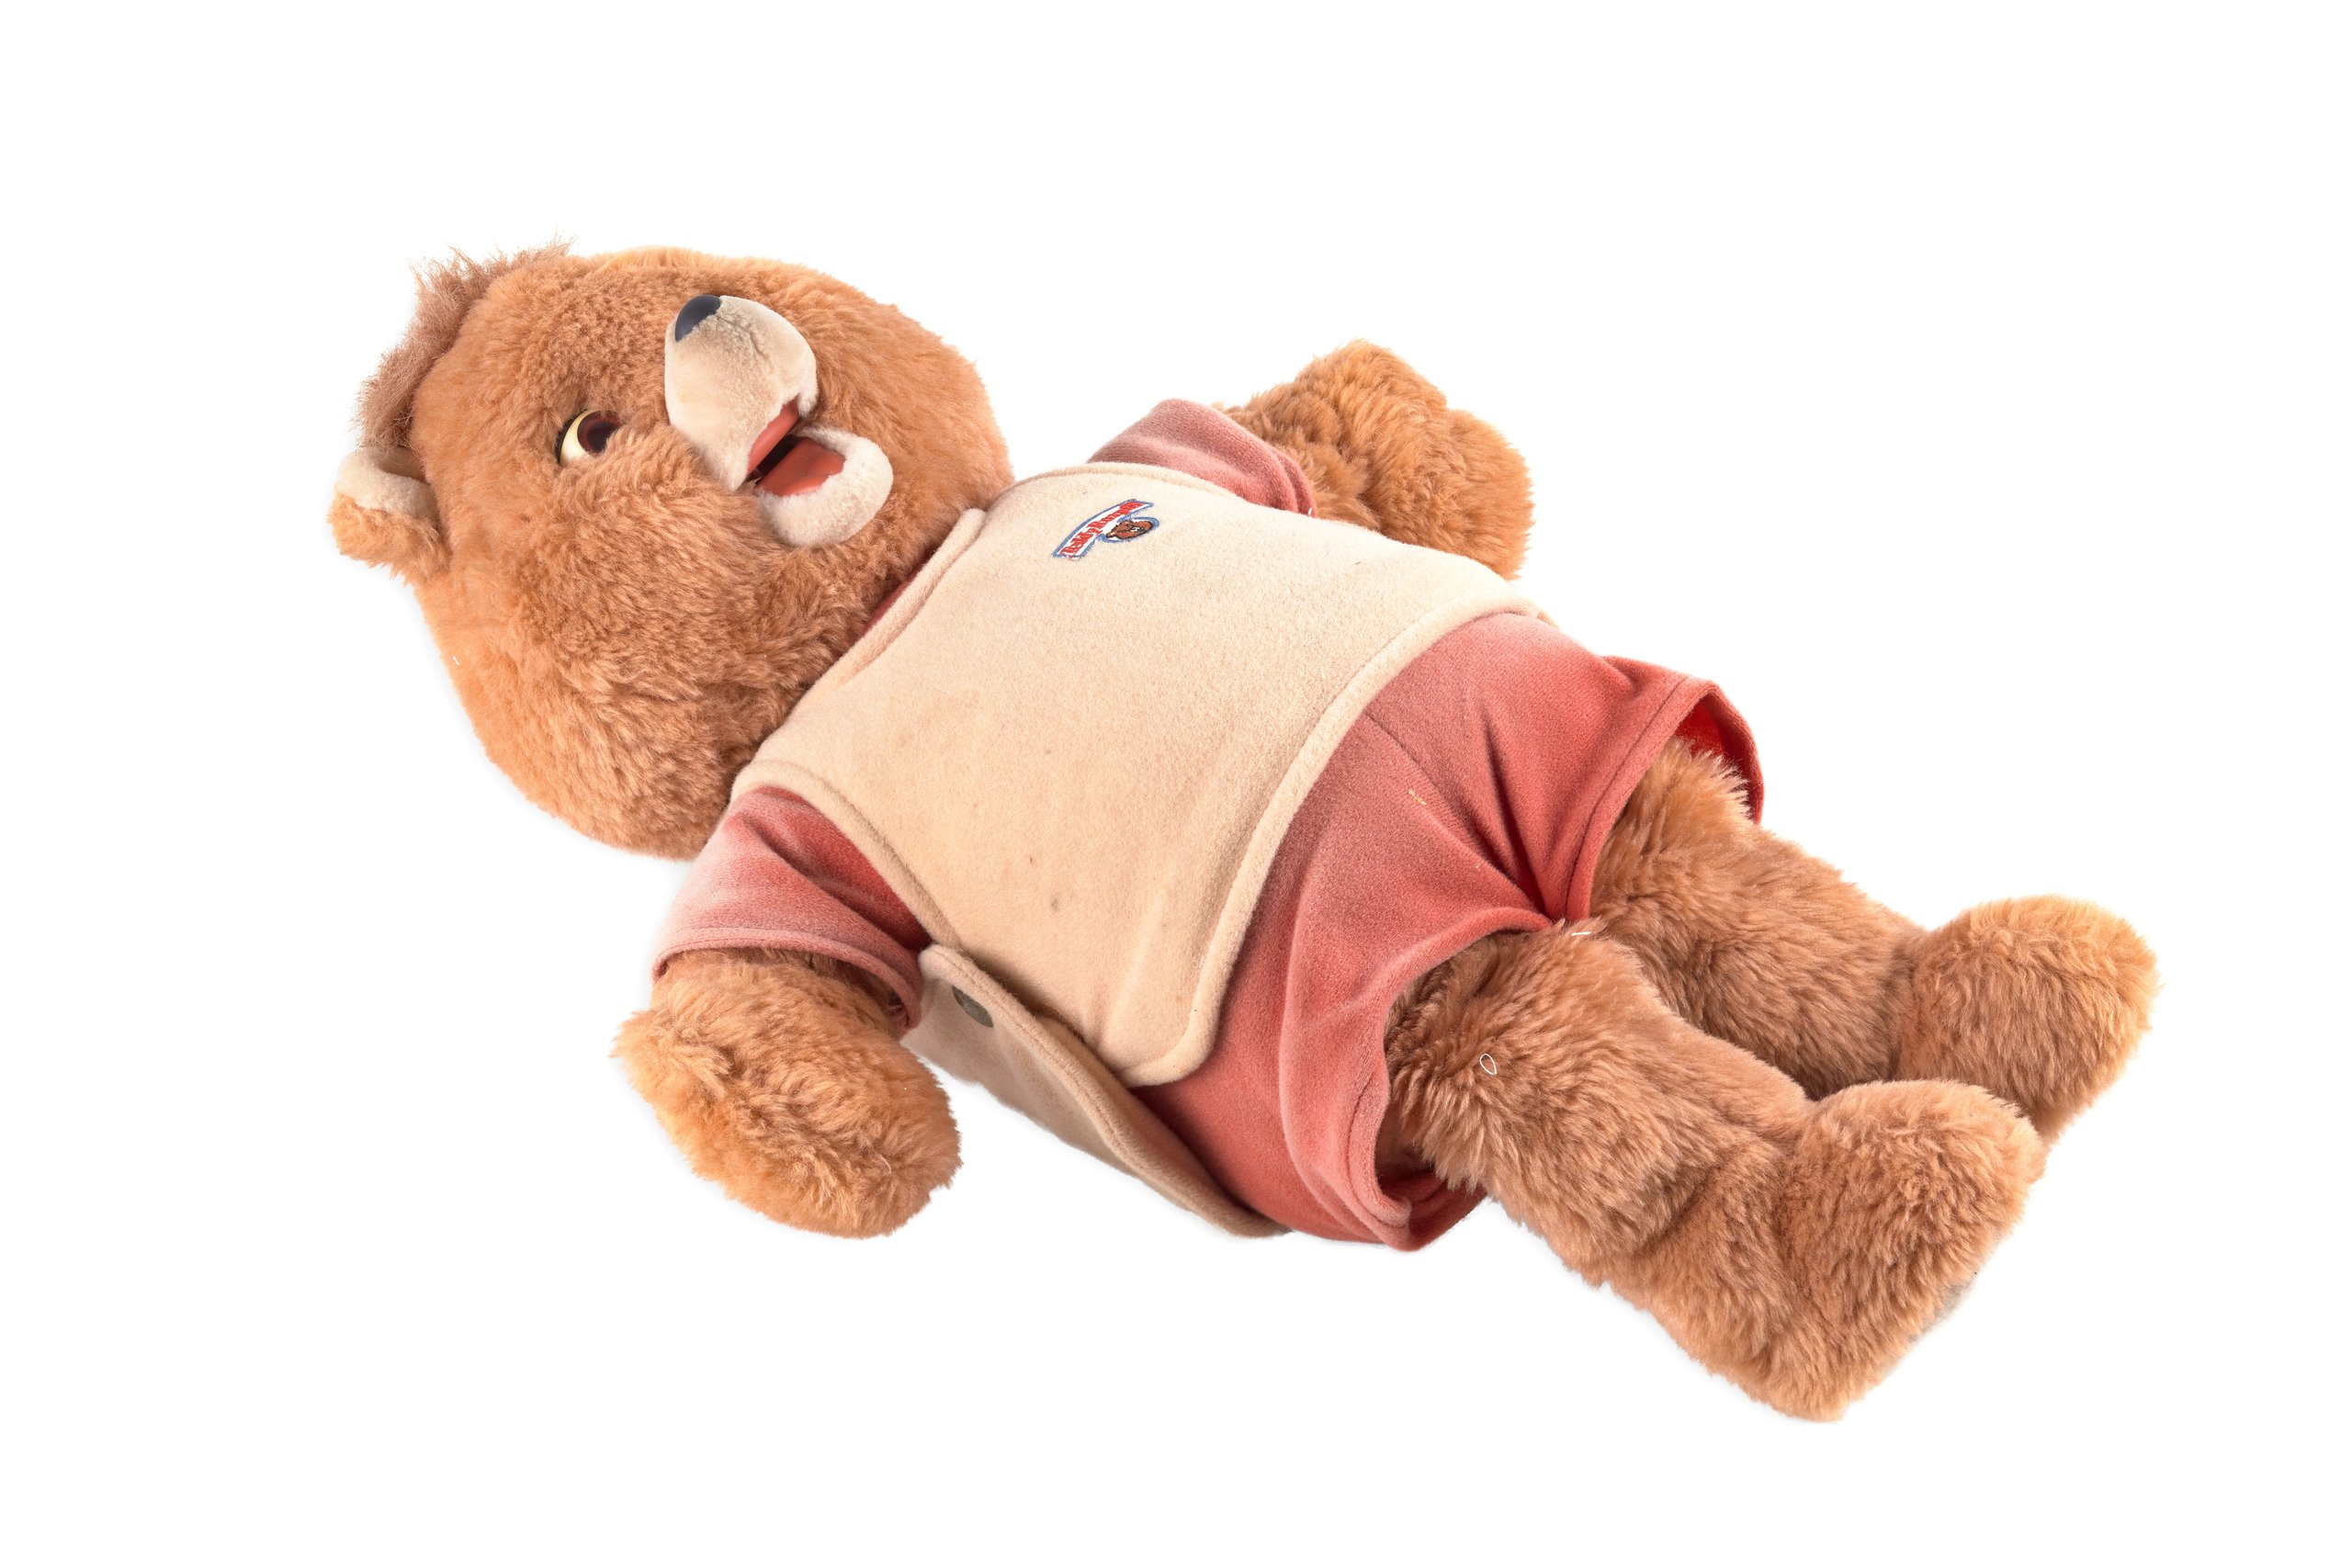 'Teddy Ruxpin' animatronic teddy bear by Worlds of Wonder Co